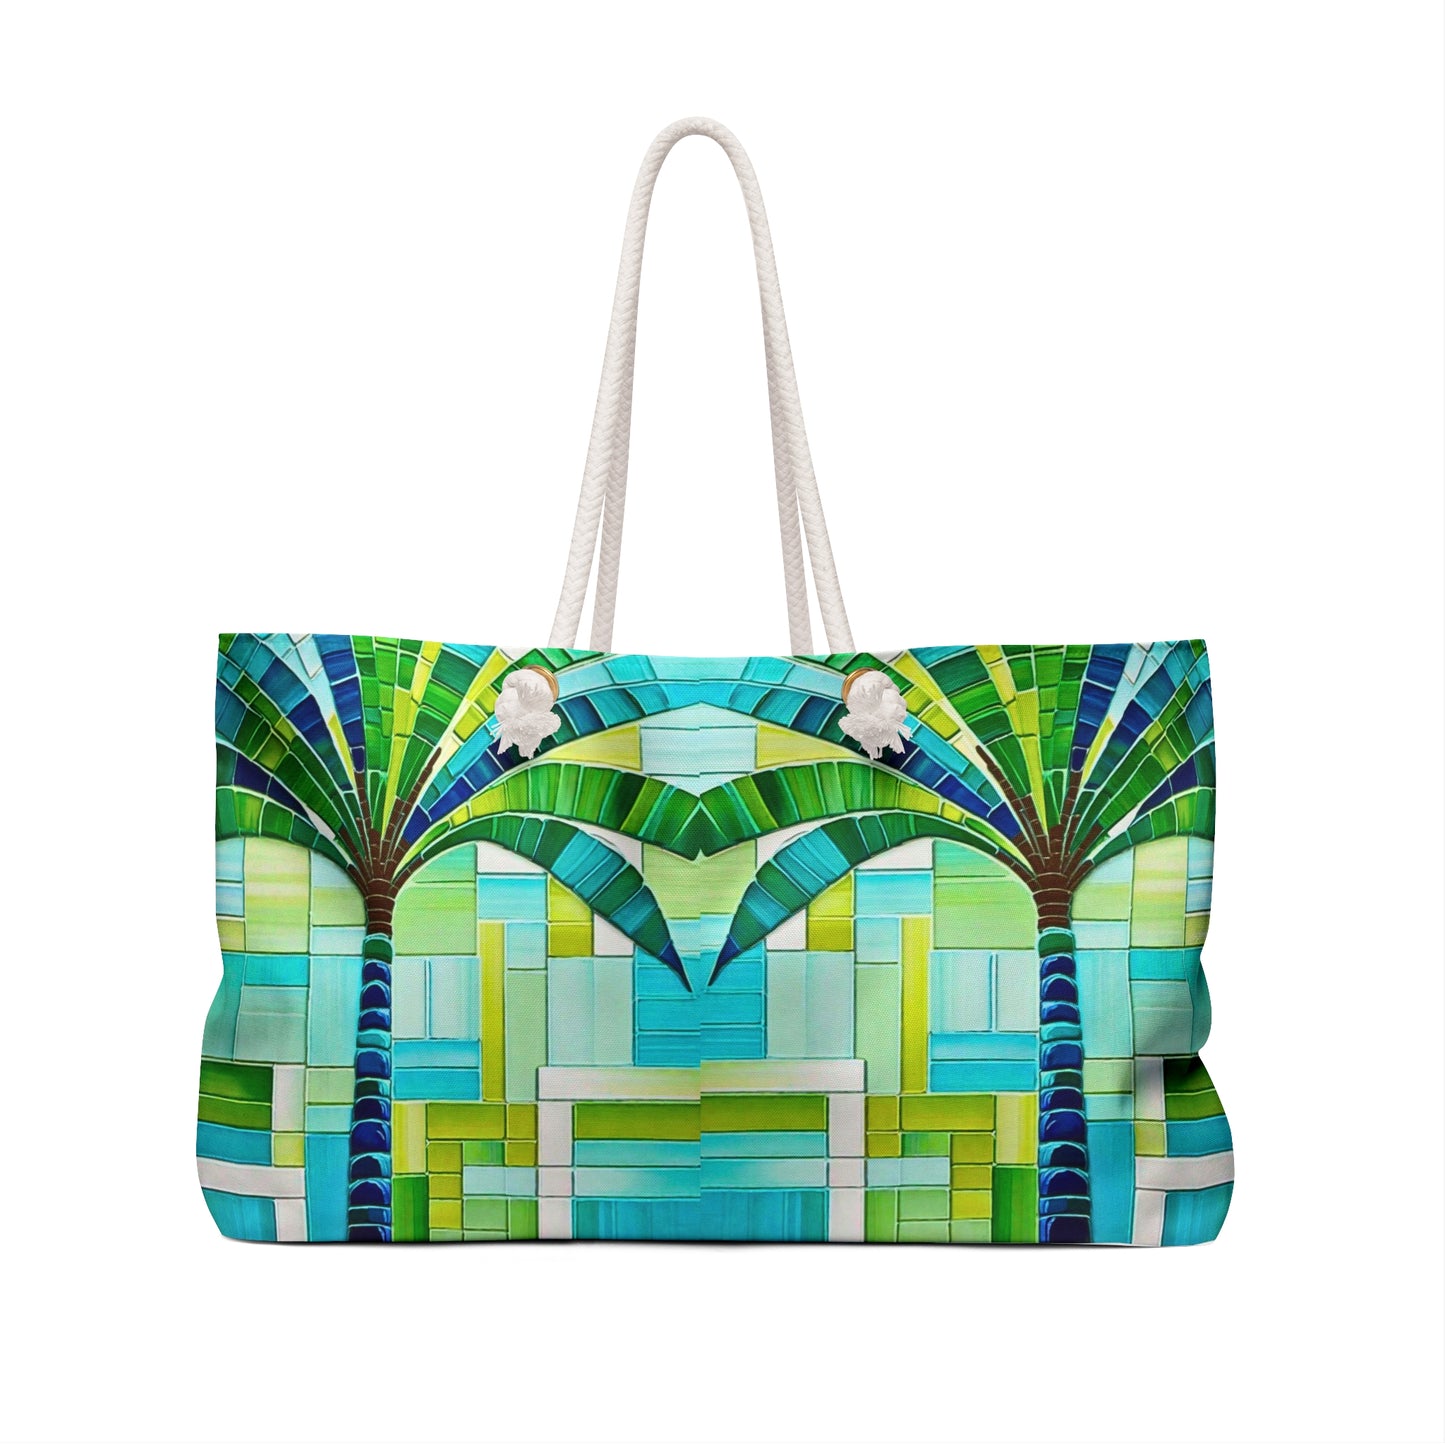 Turks and Caicos Island Palm Tree Mosaic Shopper Market Beach Vacation Weekender Bag